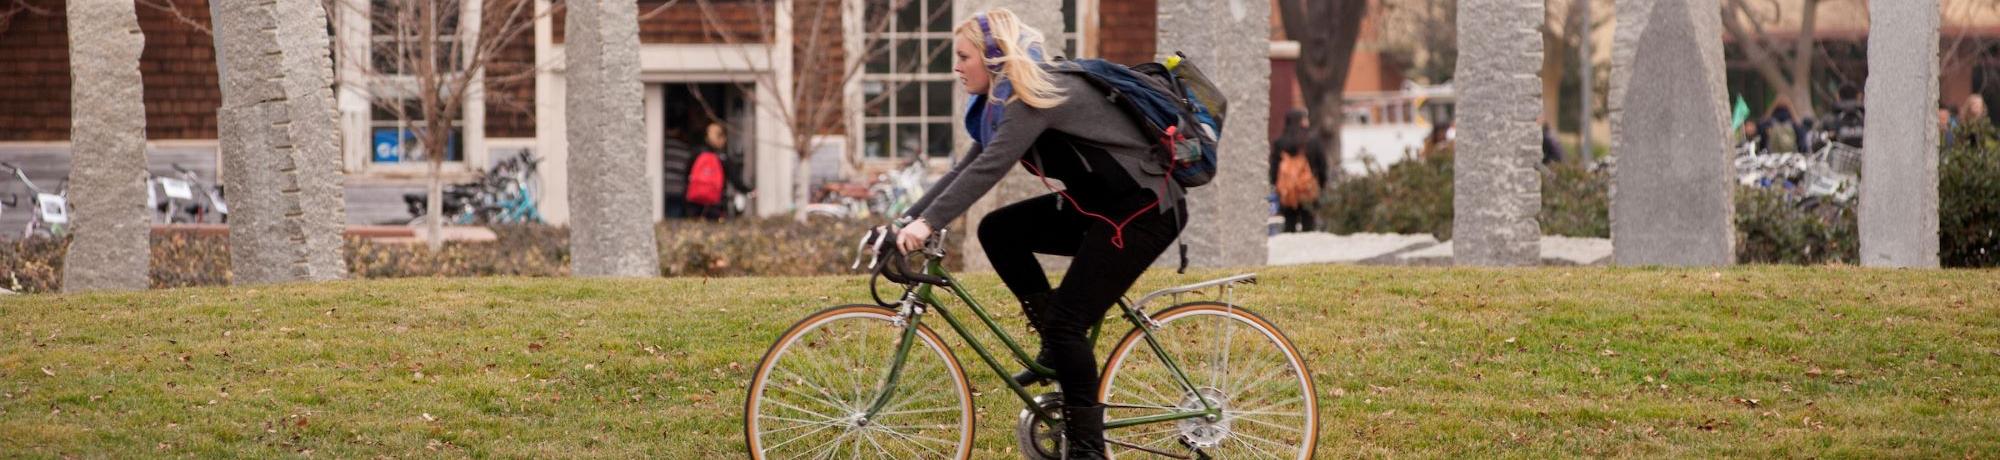 Student riding bike past sculptures